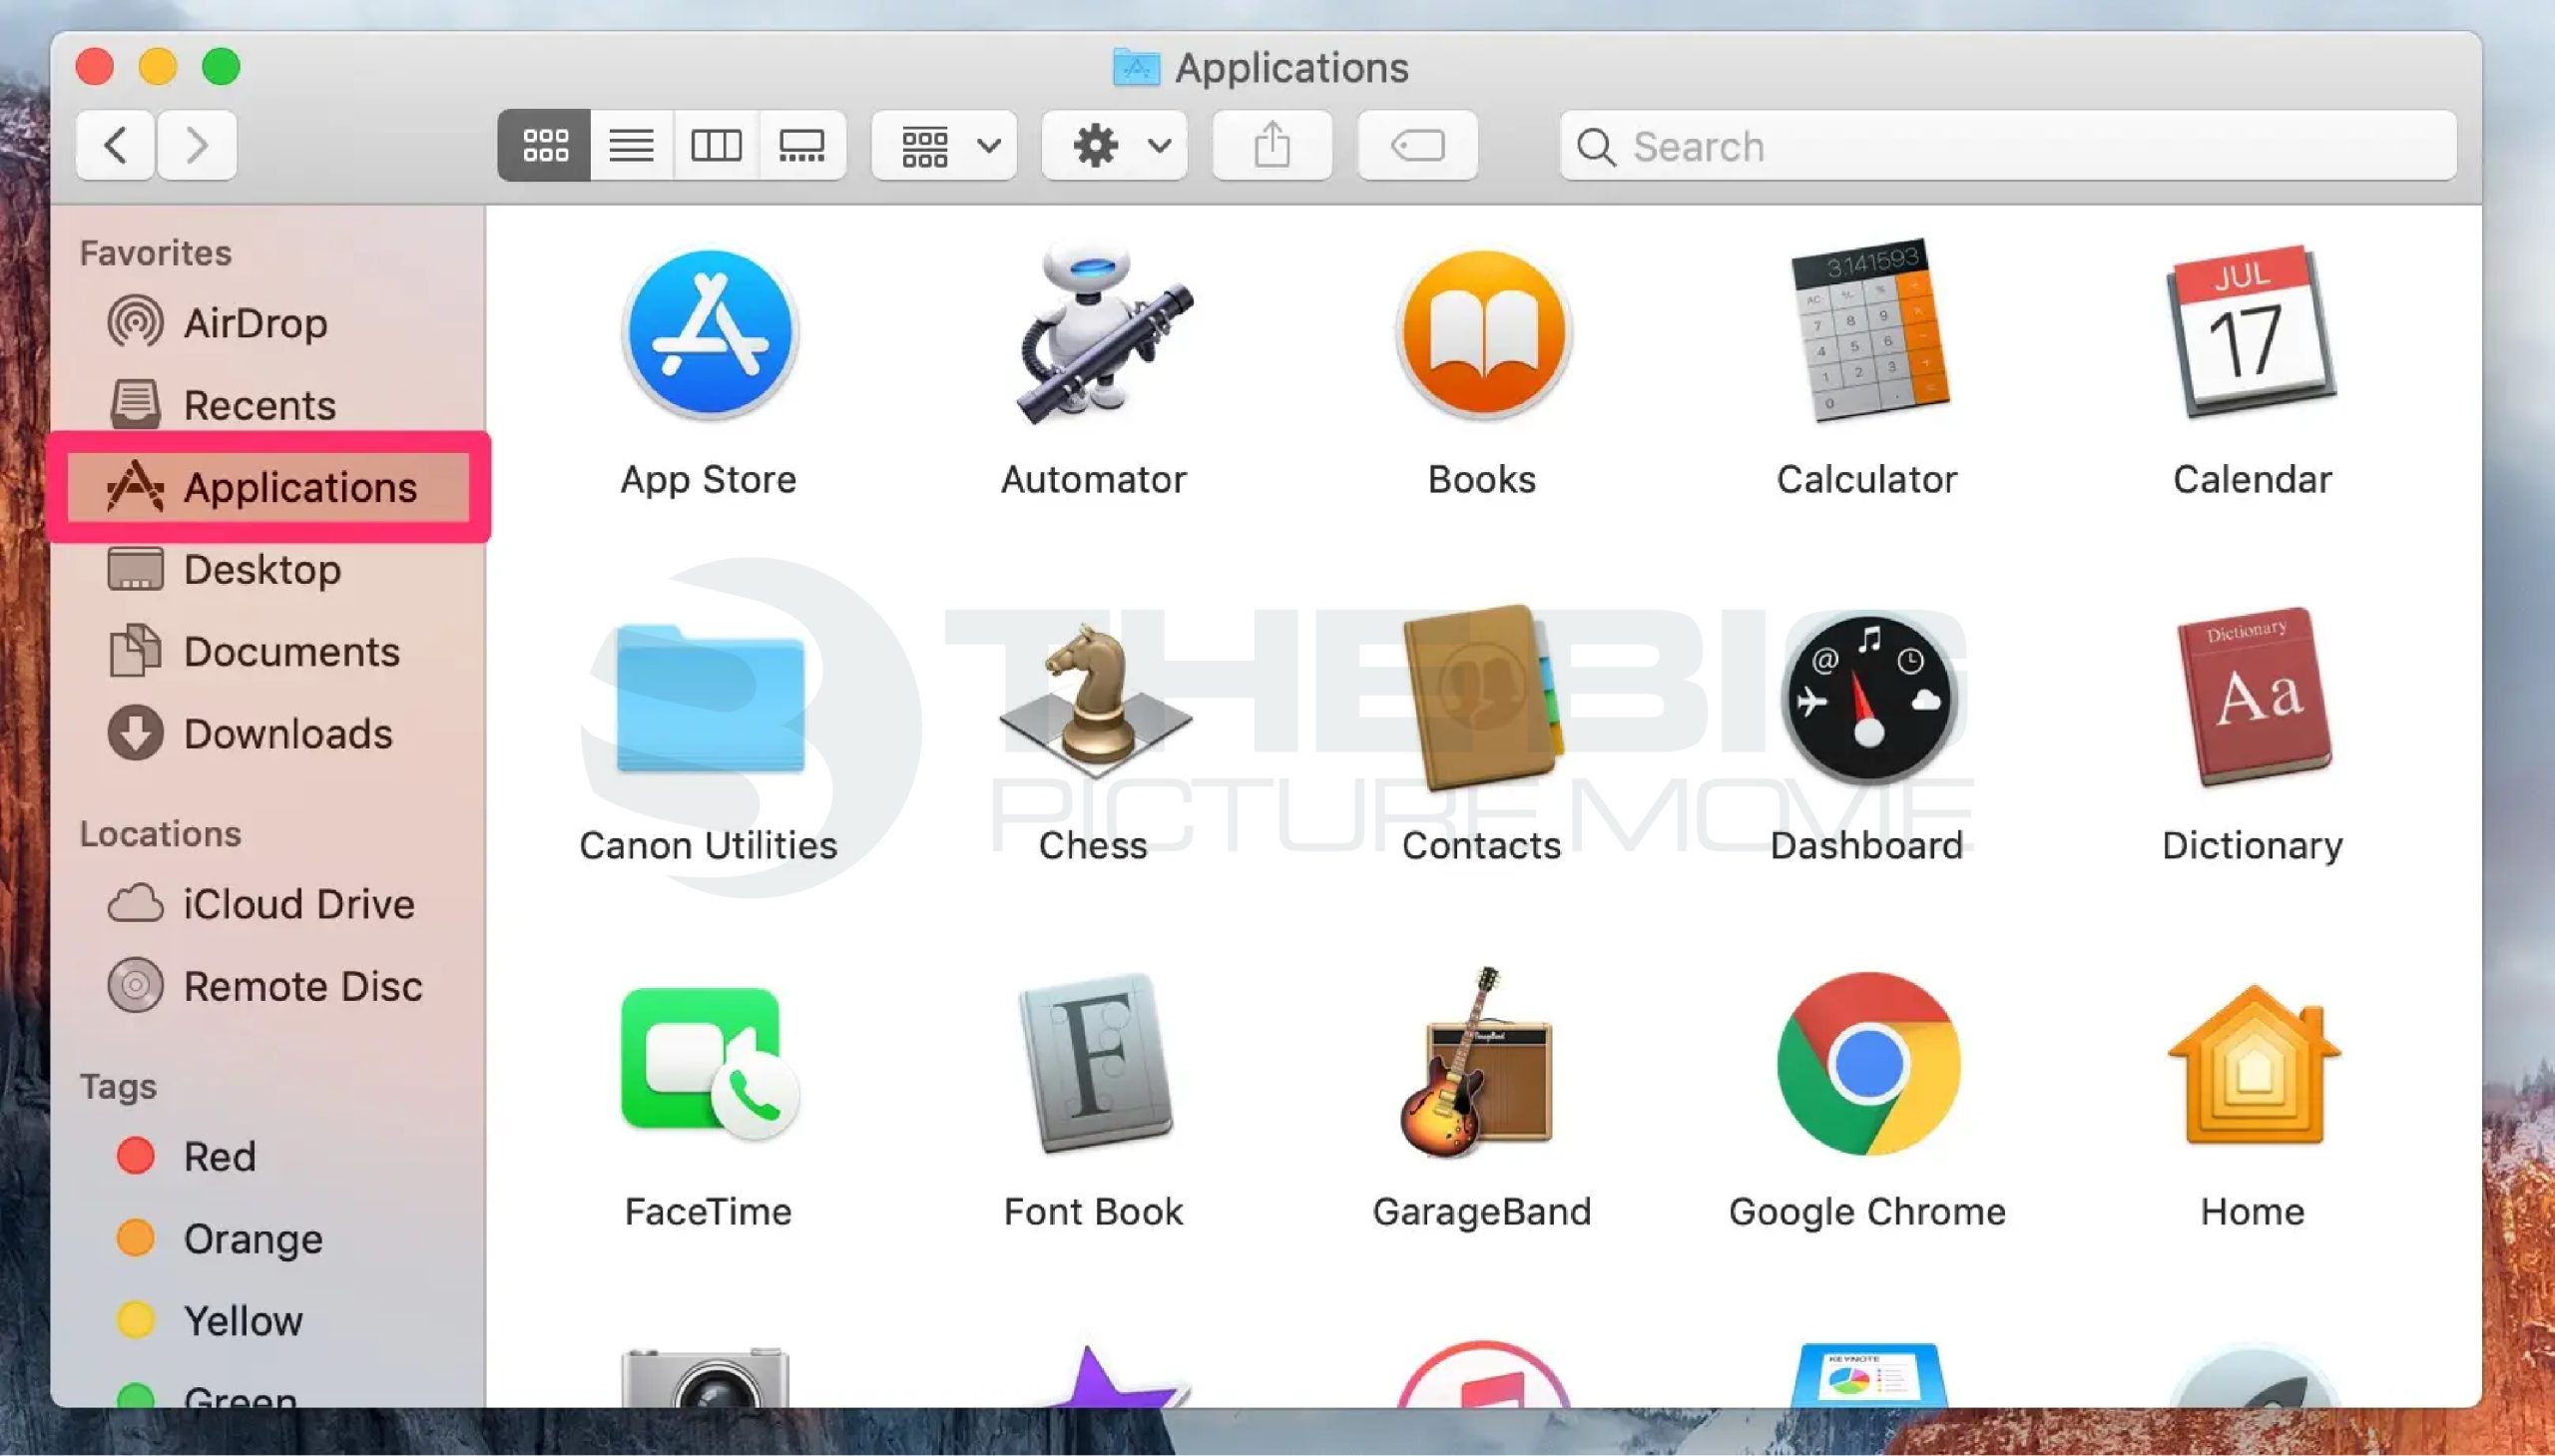 Open Applications folder on your Mac